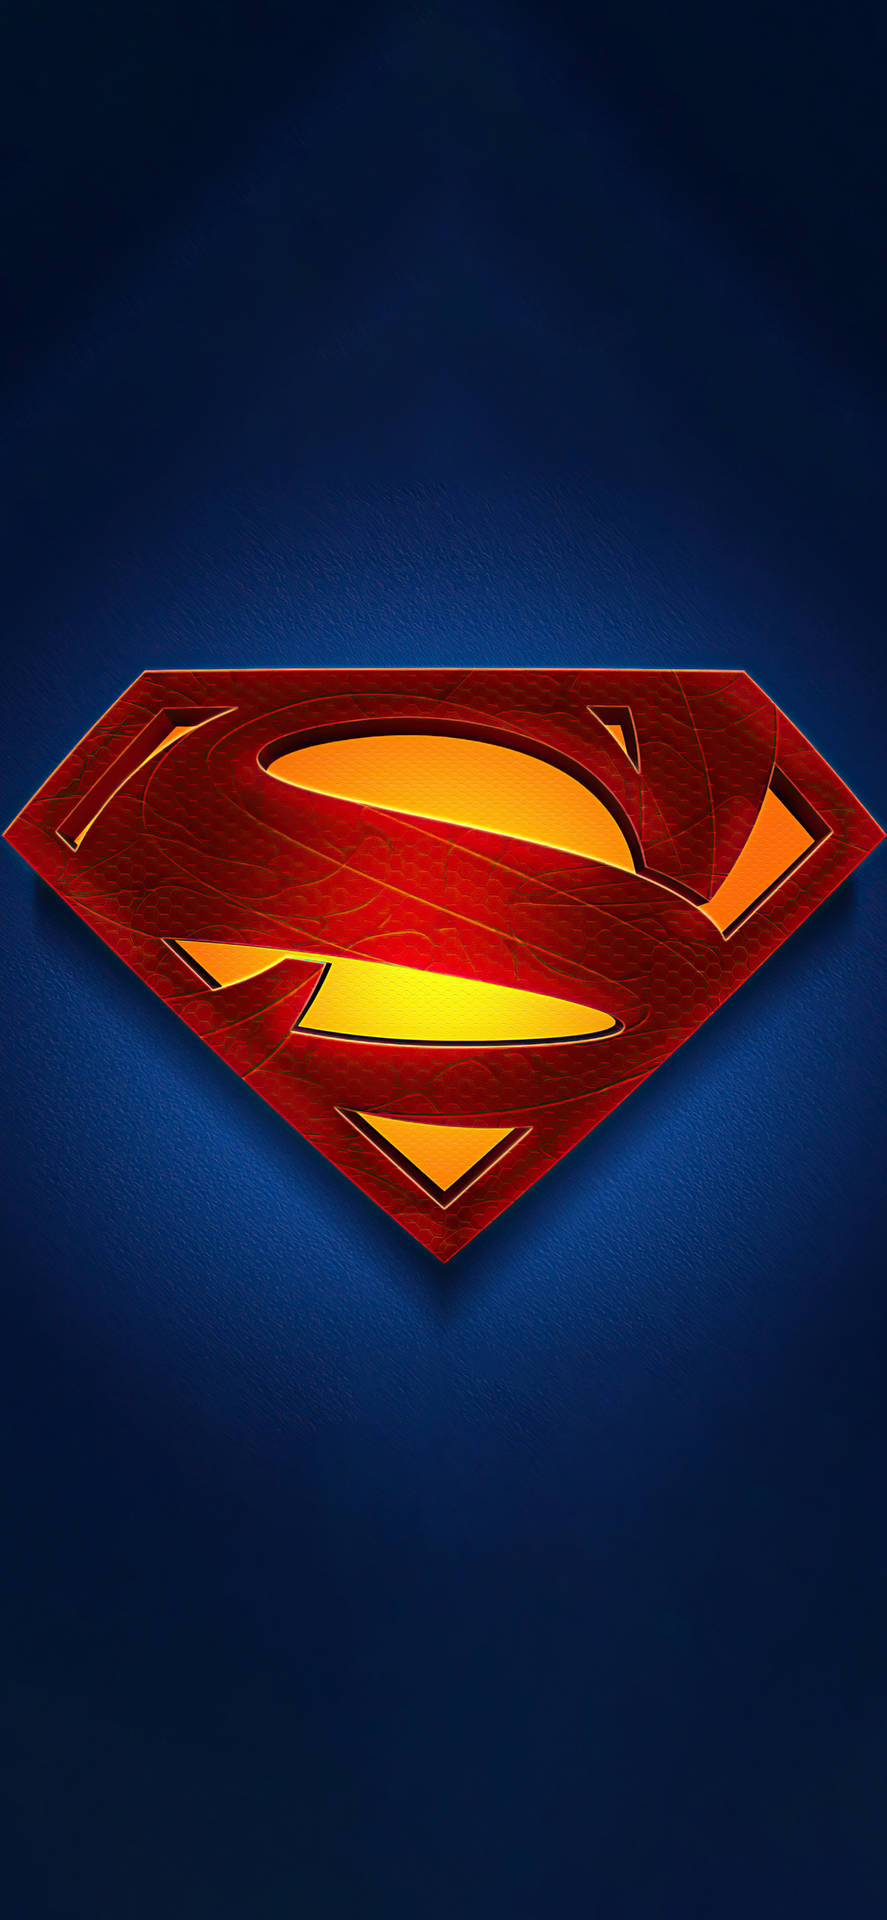 Download Cool Redesigned Superman Symbol Iphone Wallpaper 